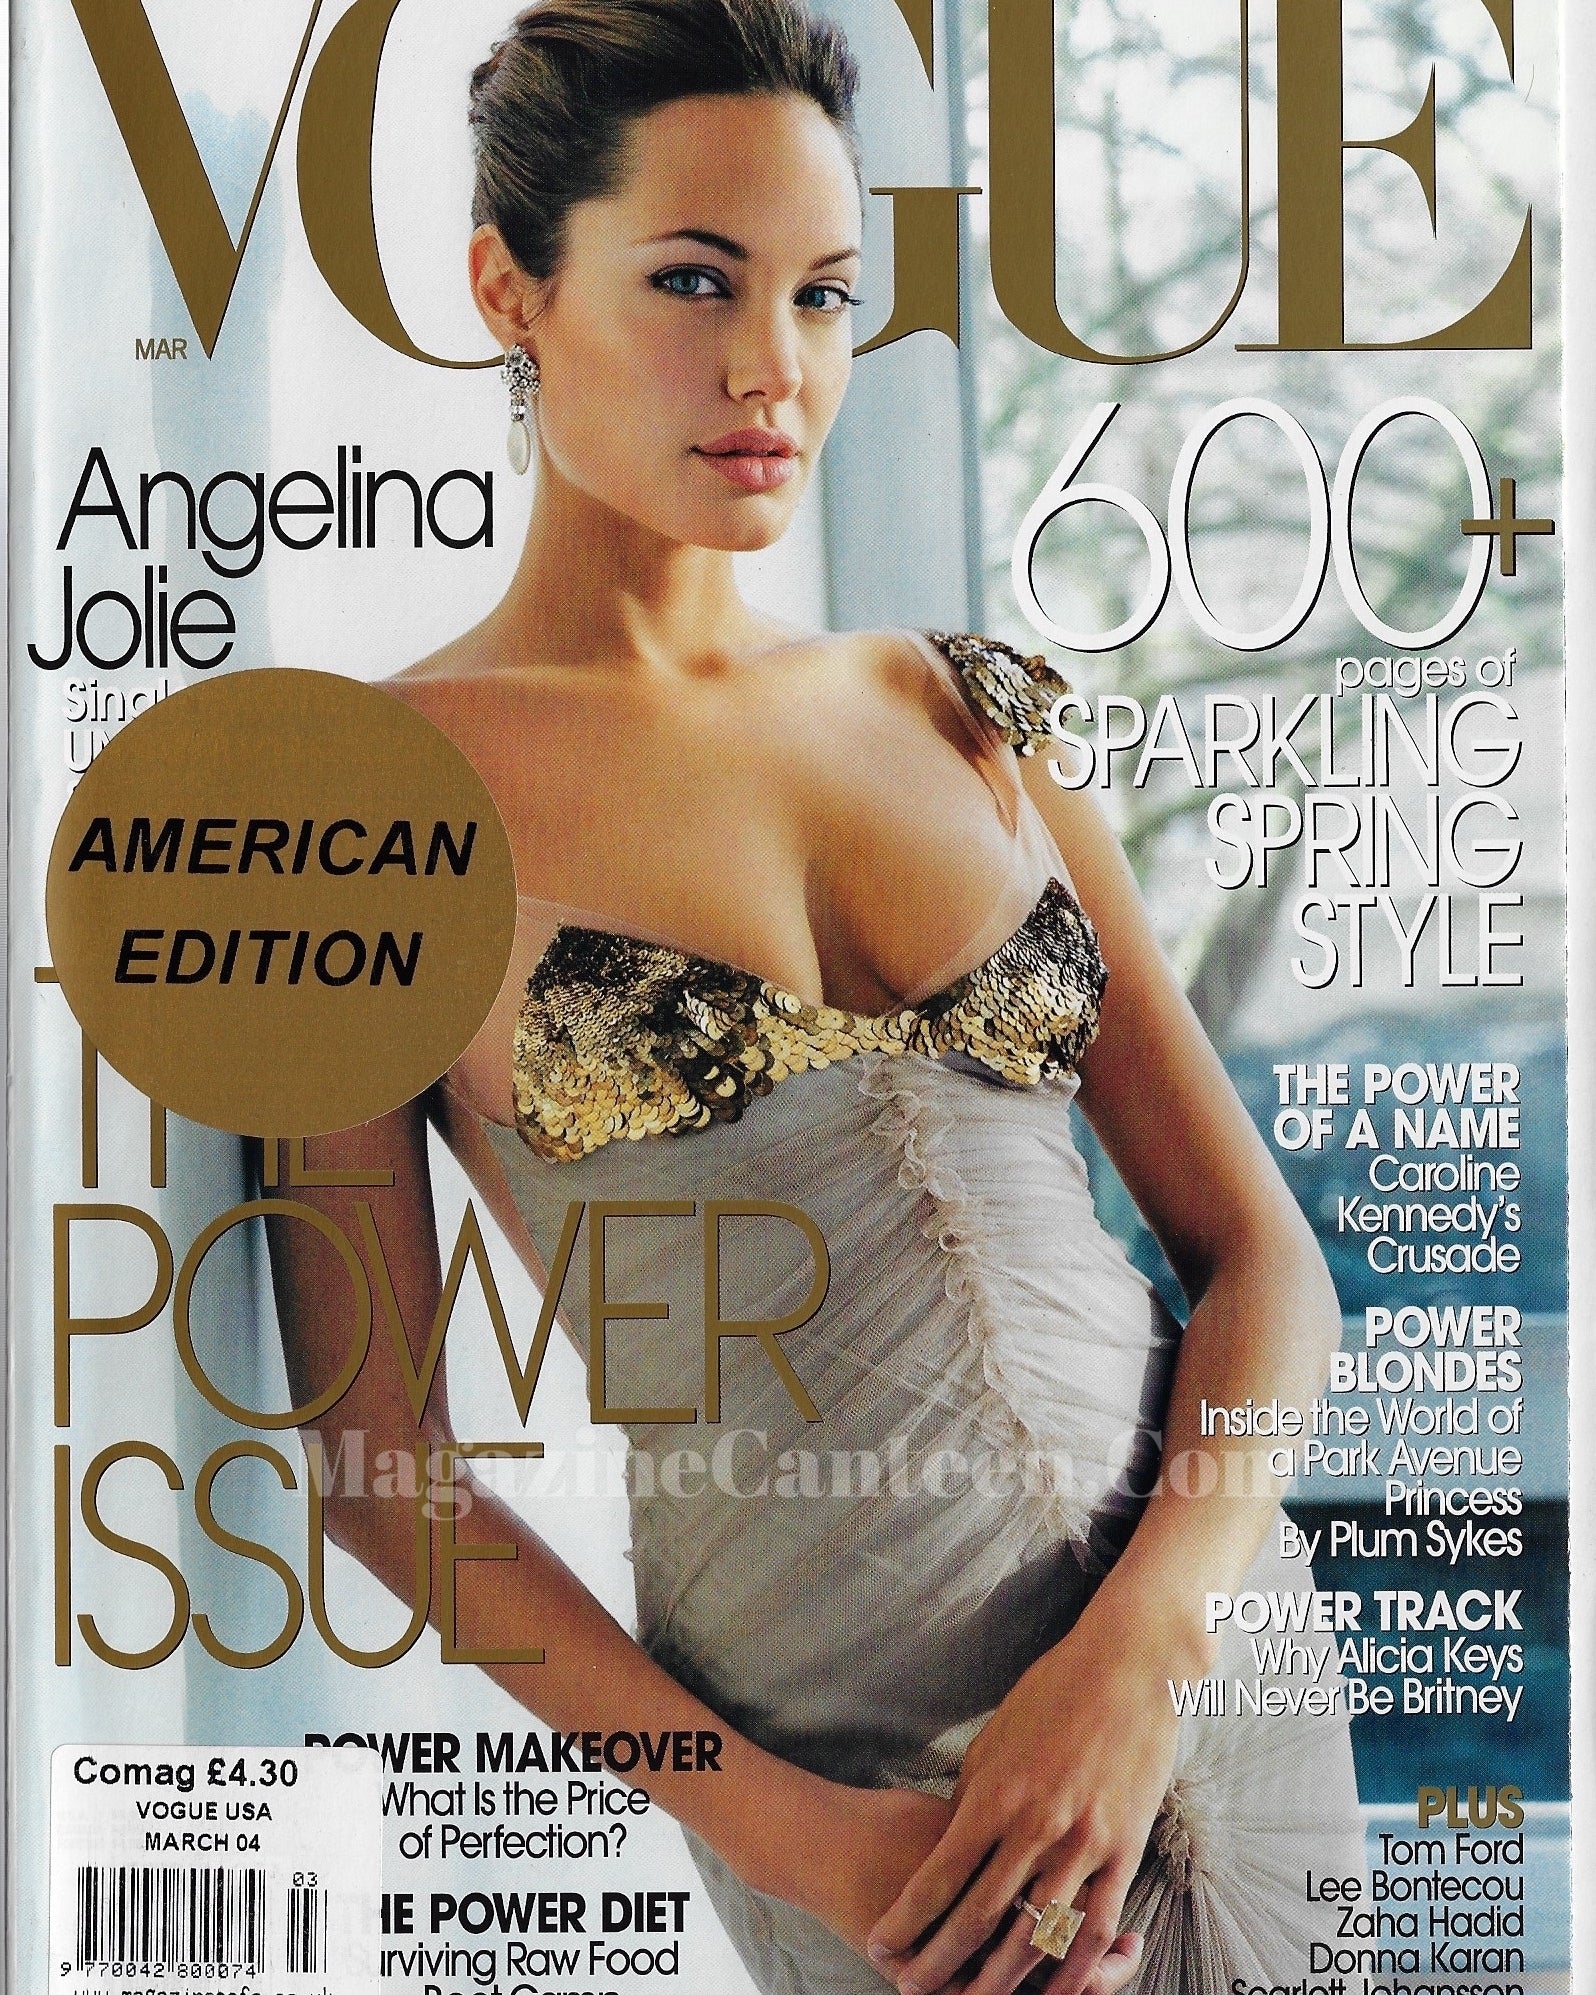 Vogue USA Magazine March 2004 - Angelina Jolie